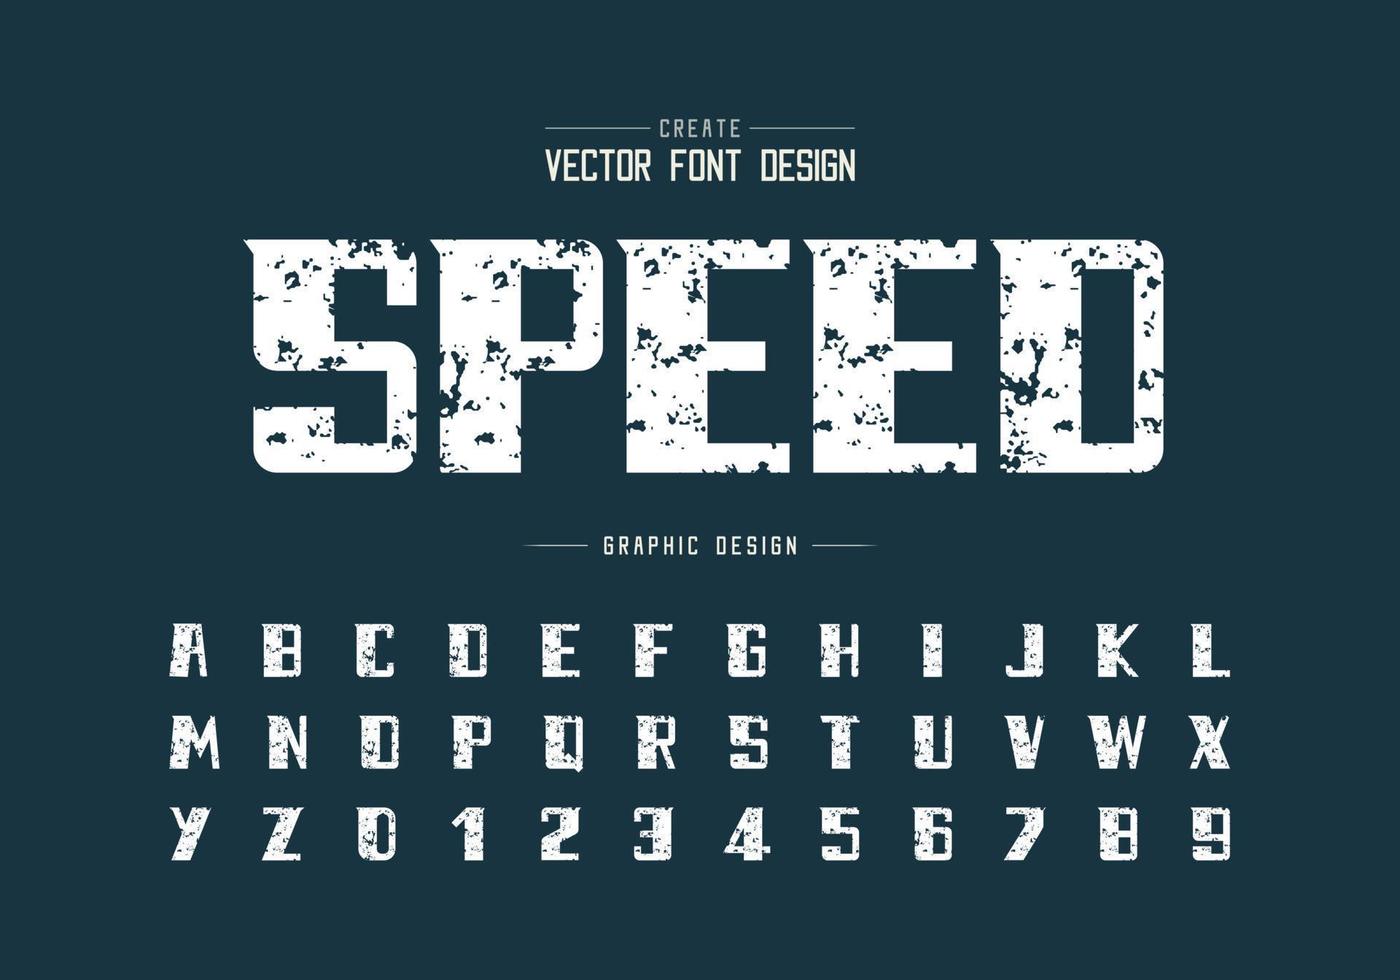 fonte de velocidade e vetor de alfabeto em negrito, tipo de letra moderno vintage e design de número de letra